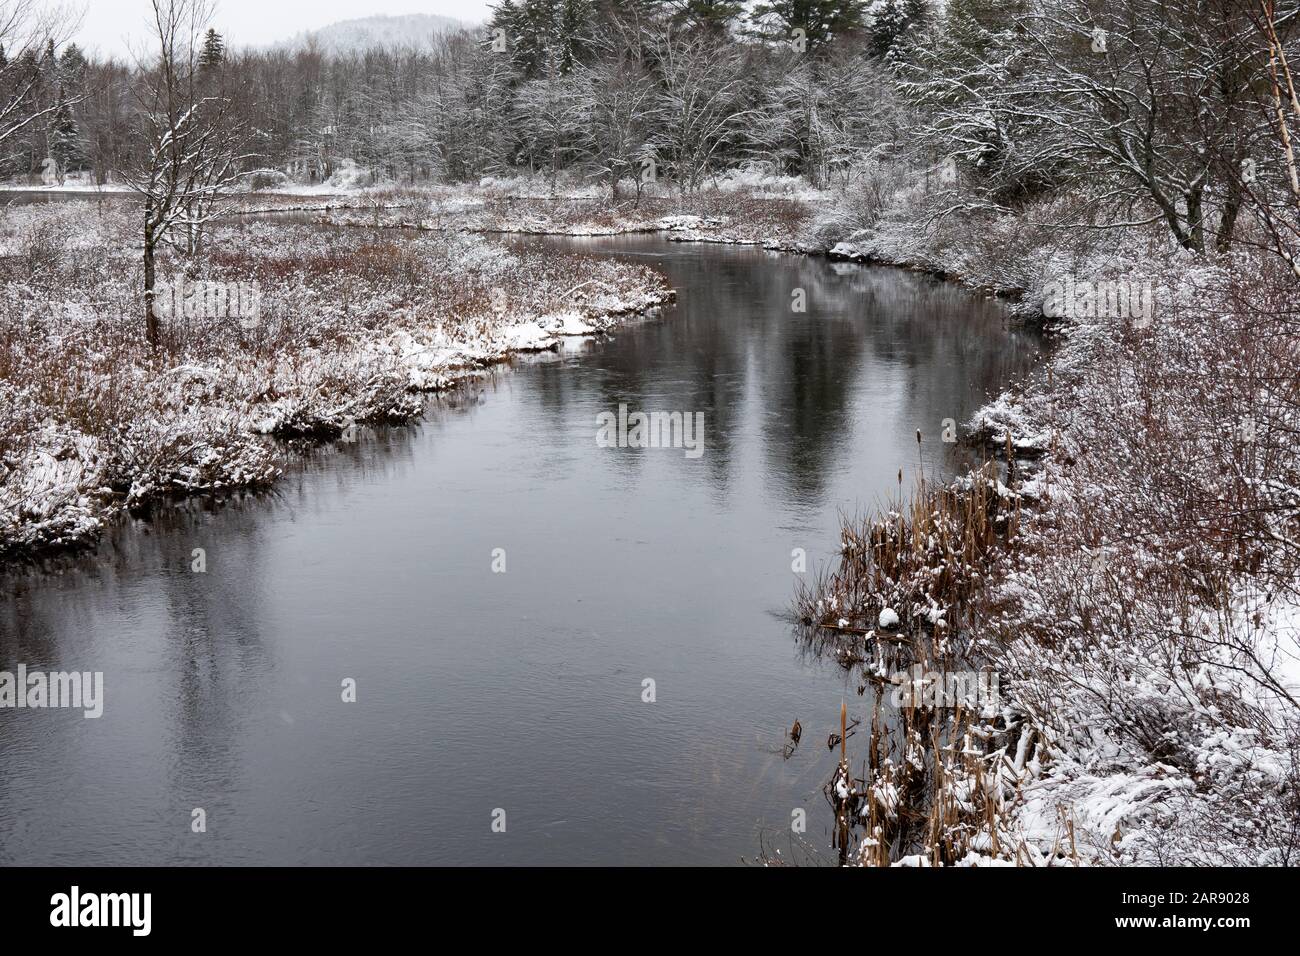 A snowy winter scene of the Sacandaga River near Speculator, NY USA in the Adirondack Mountains. Stock Photo